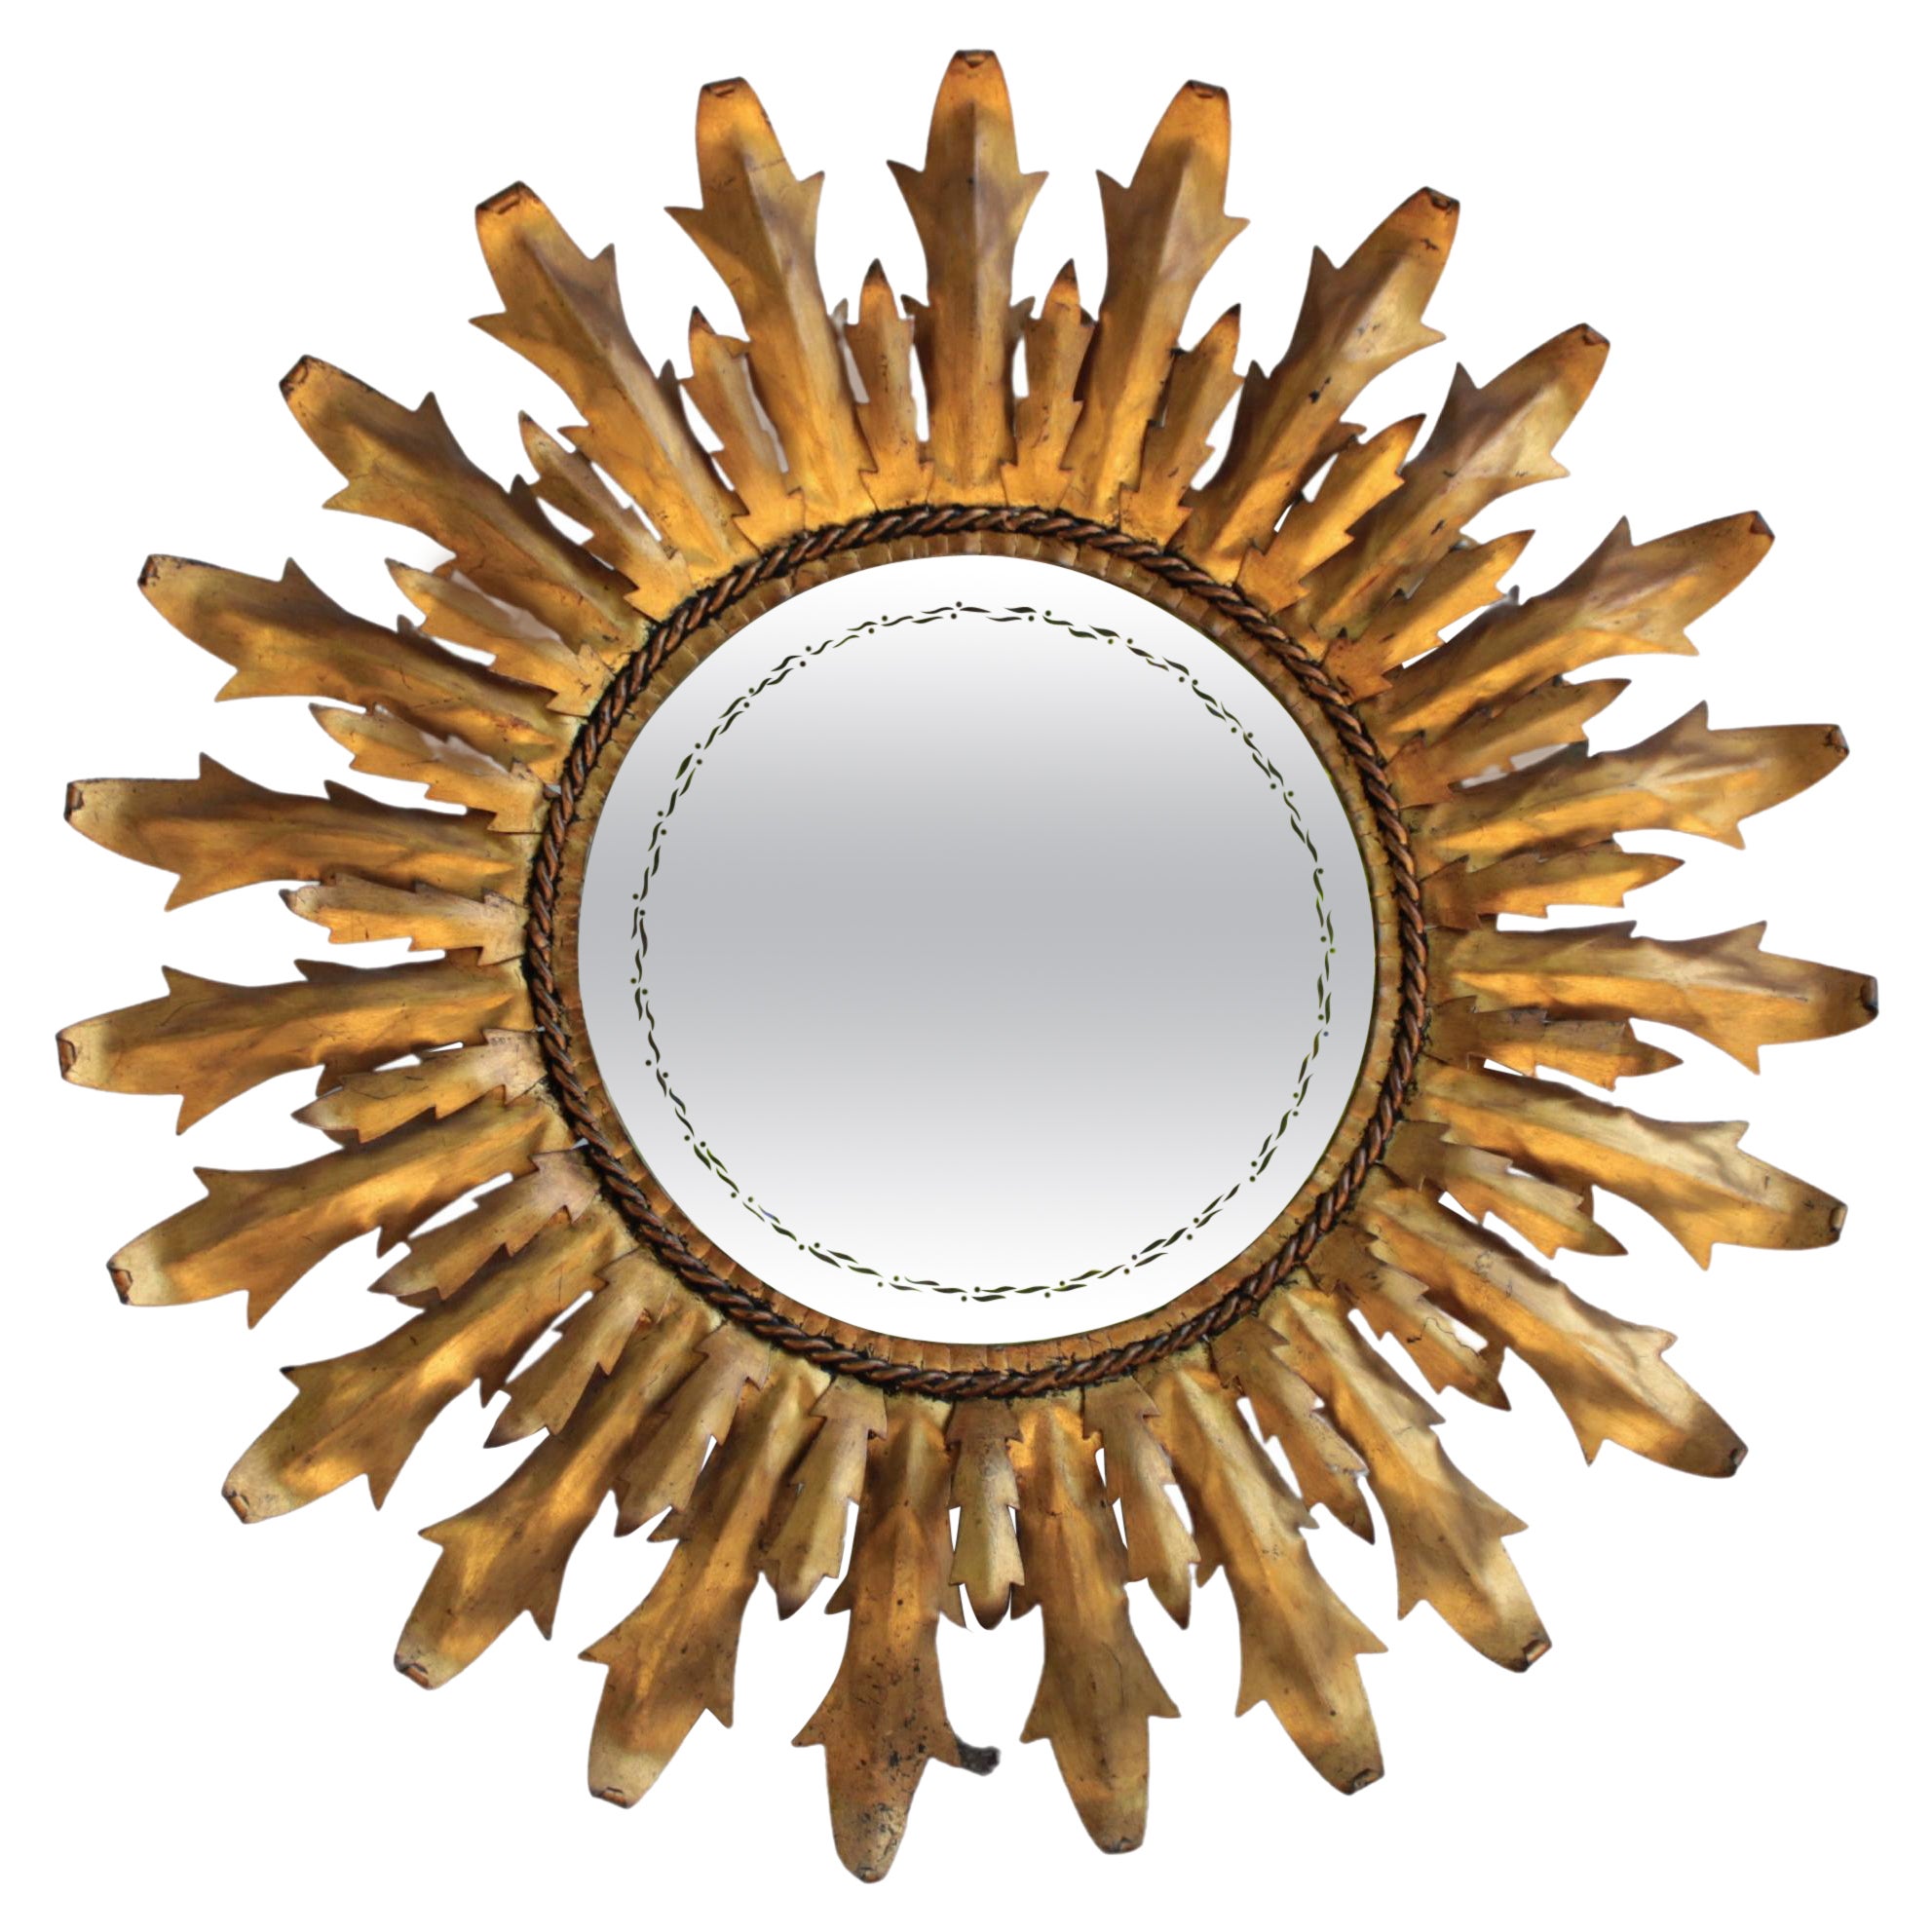 Circular Mirror "Sun" in Golden Metal, Spain Century XX, C. 1980 For Sale